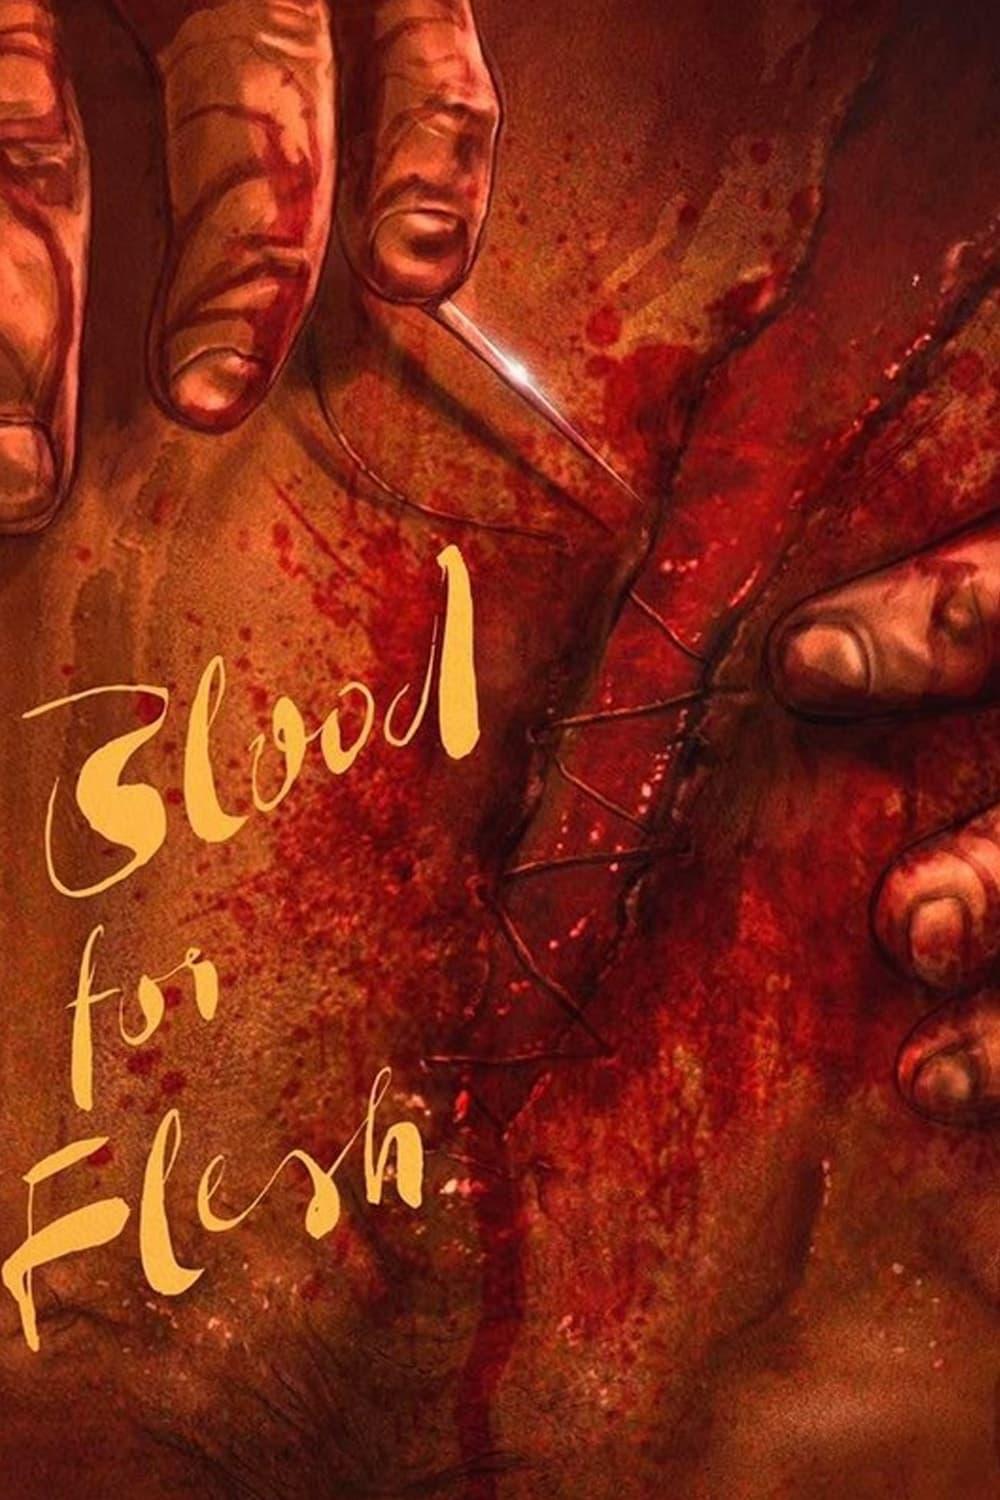 Blood for Flesh poster